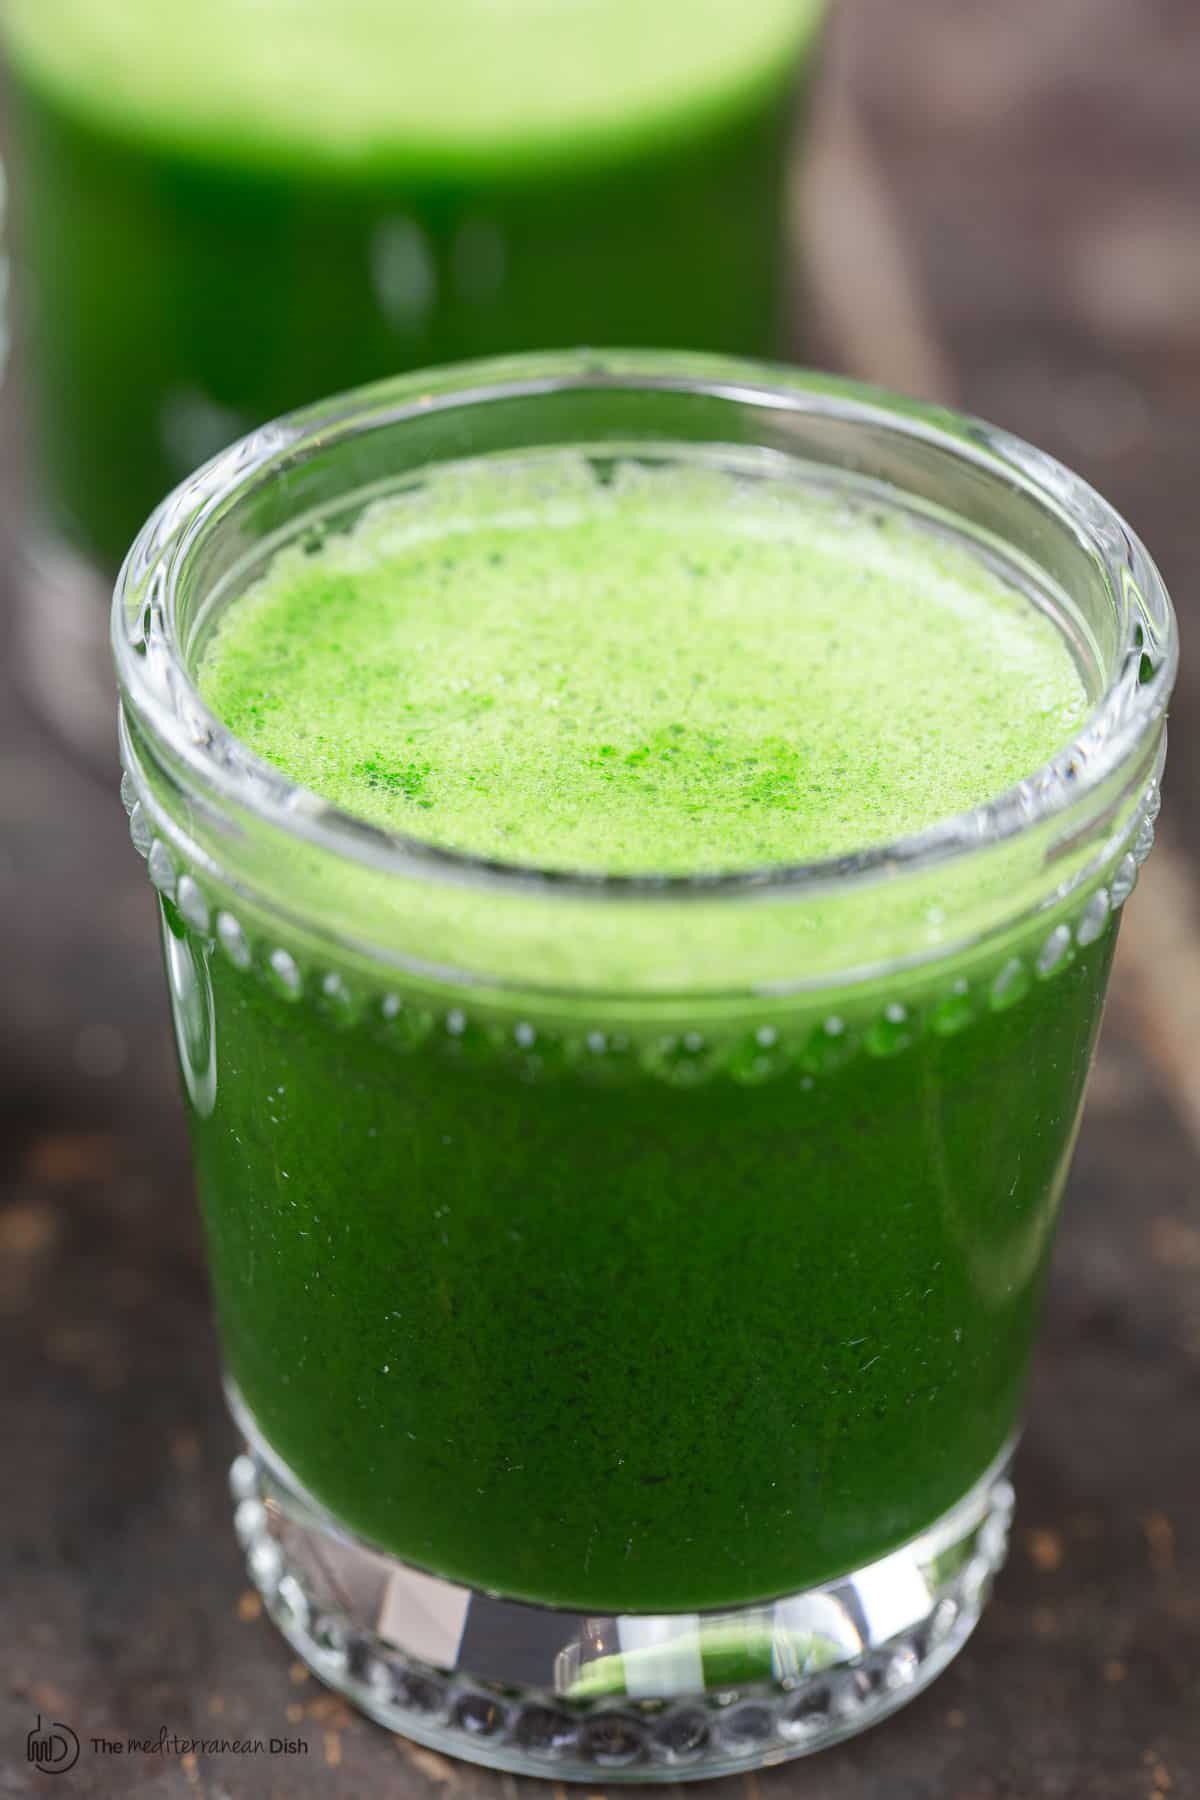 https://www.themediterraneandish.com/wp-content/uploads/2020/02/homemade-green-juice-recipe-5.jpg